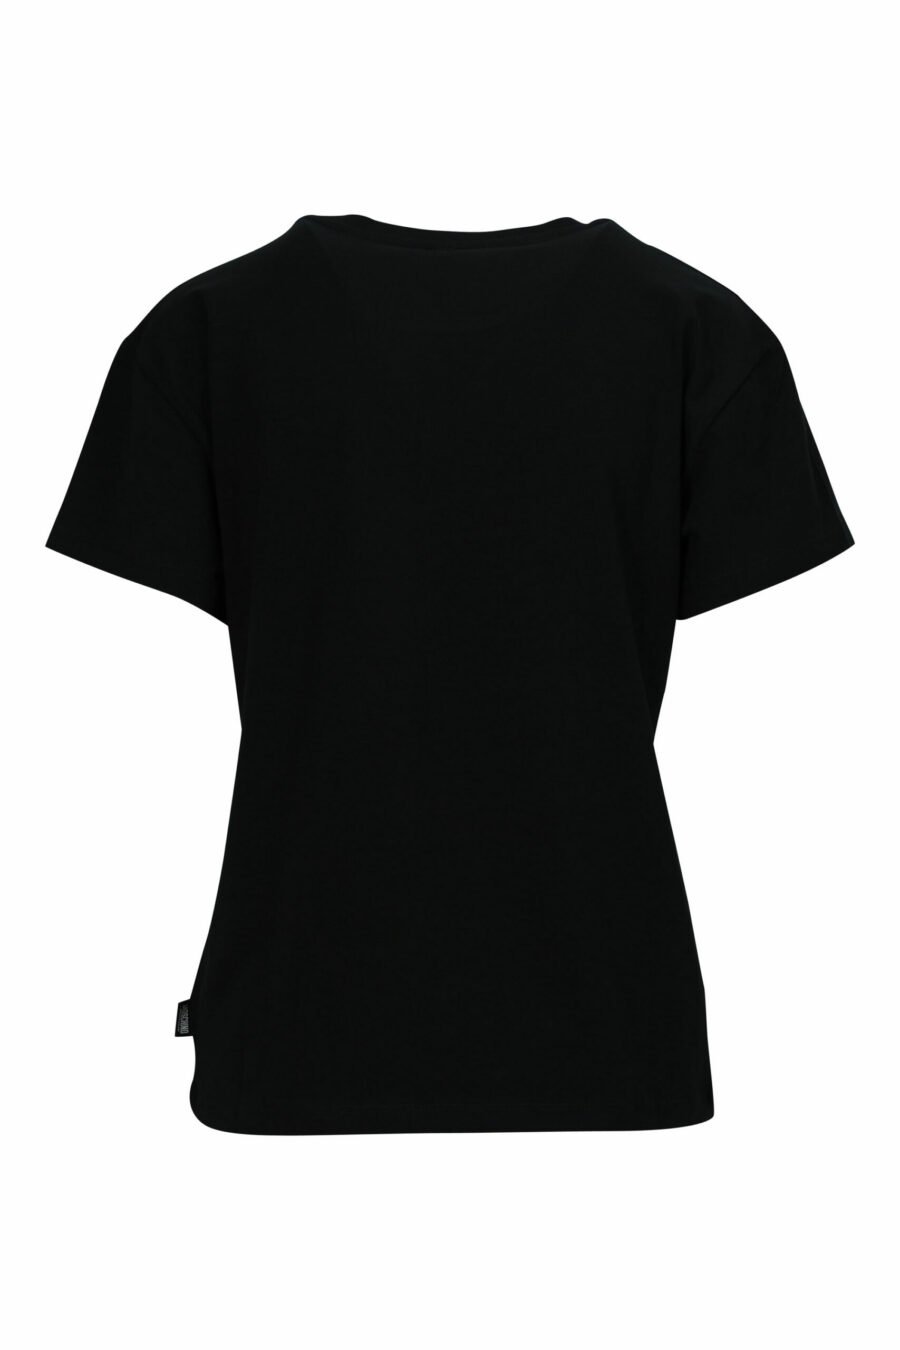 Camiseta negra "oversize" con logo oso "underbear" parche - 667113697666 1 scaled